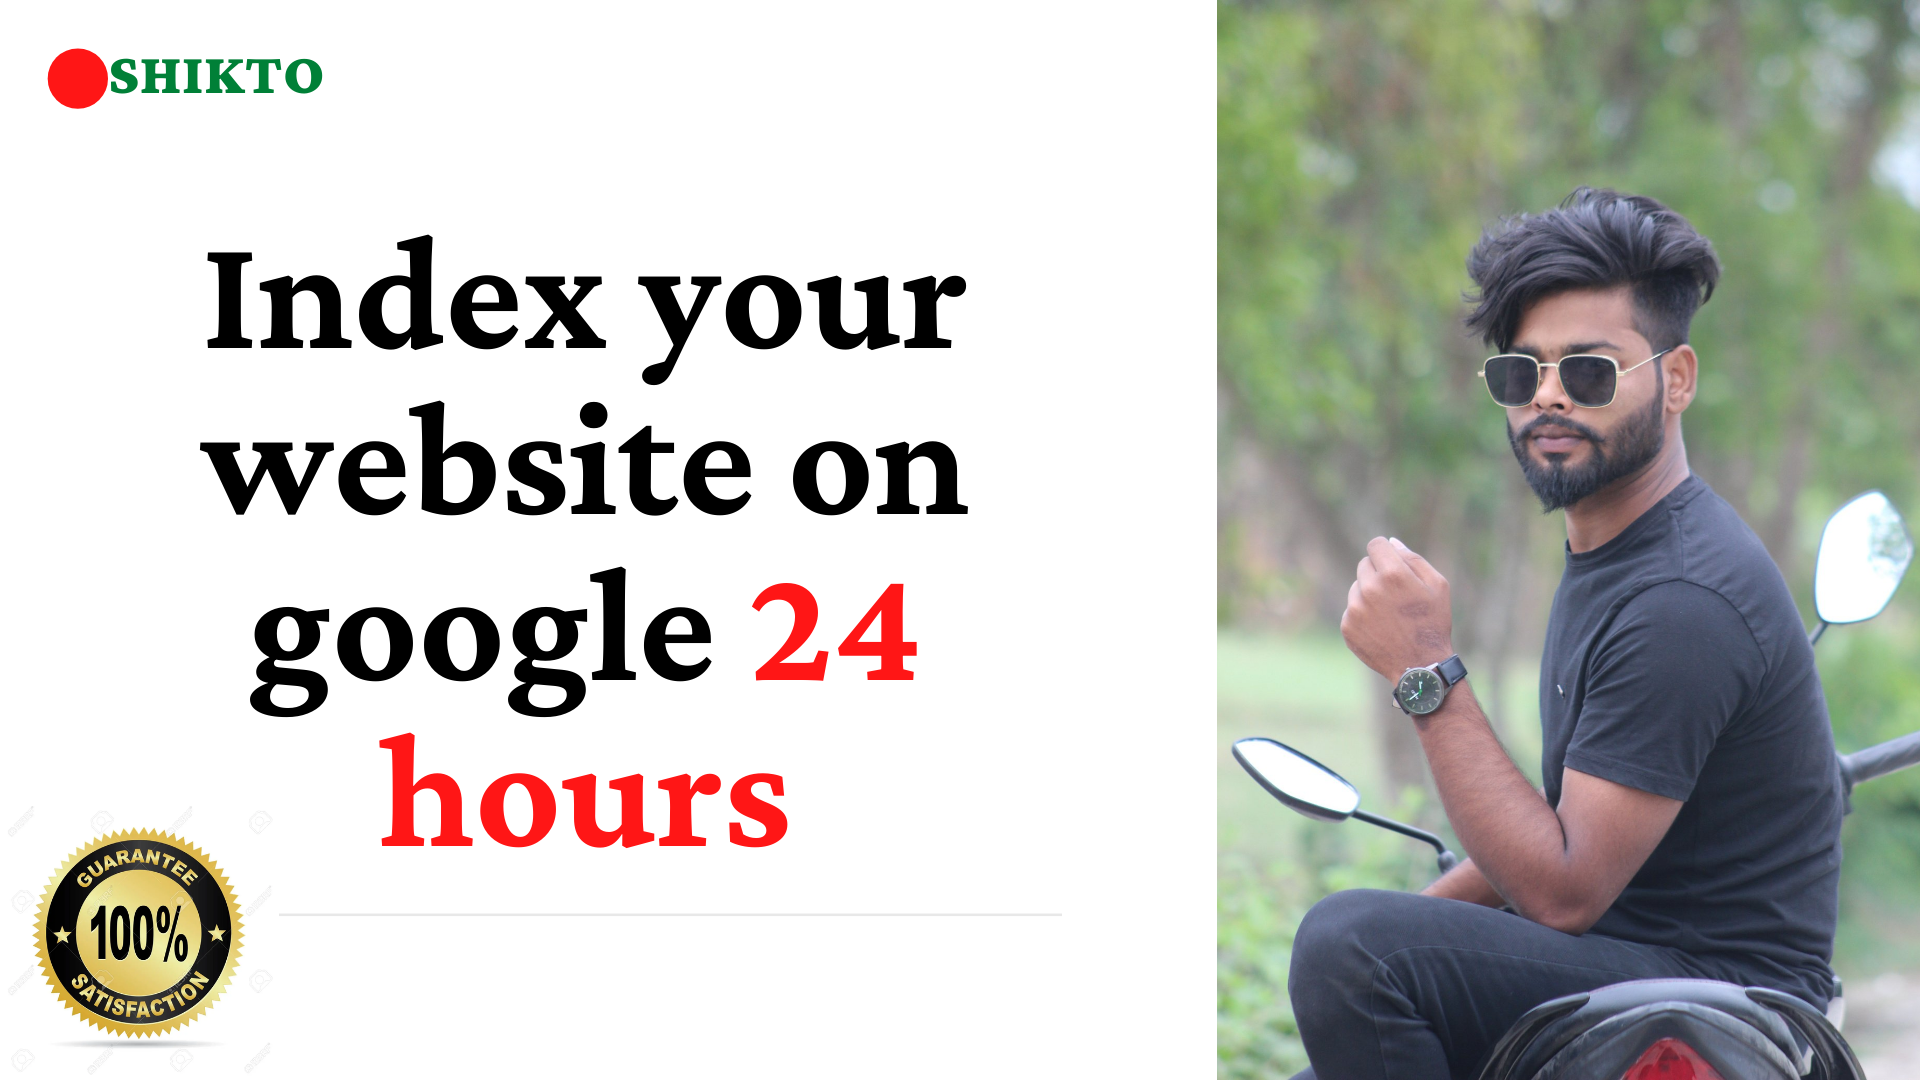 Index your website on google 24 hours